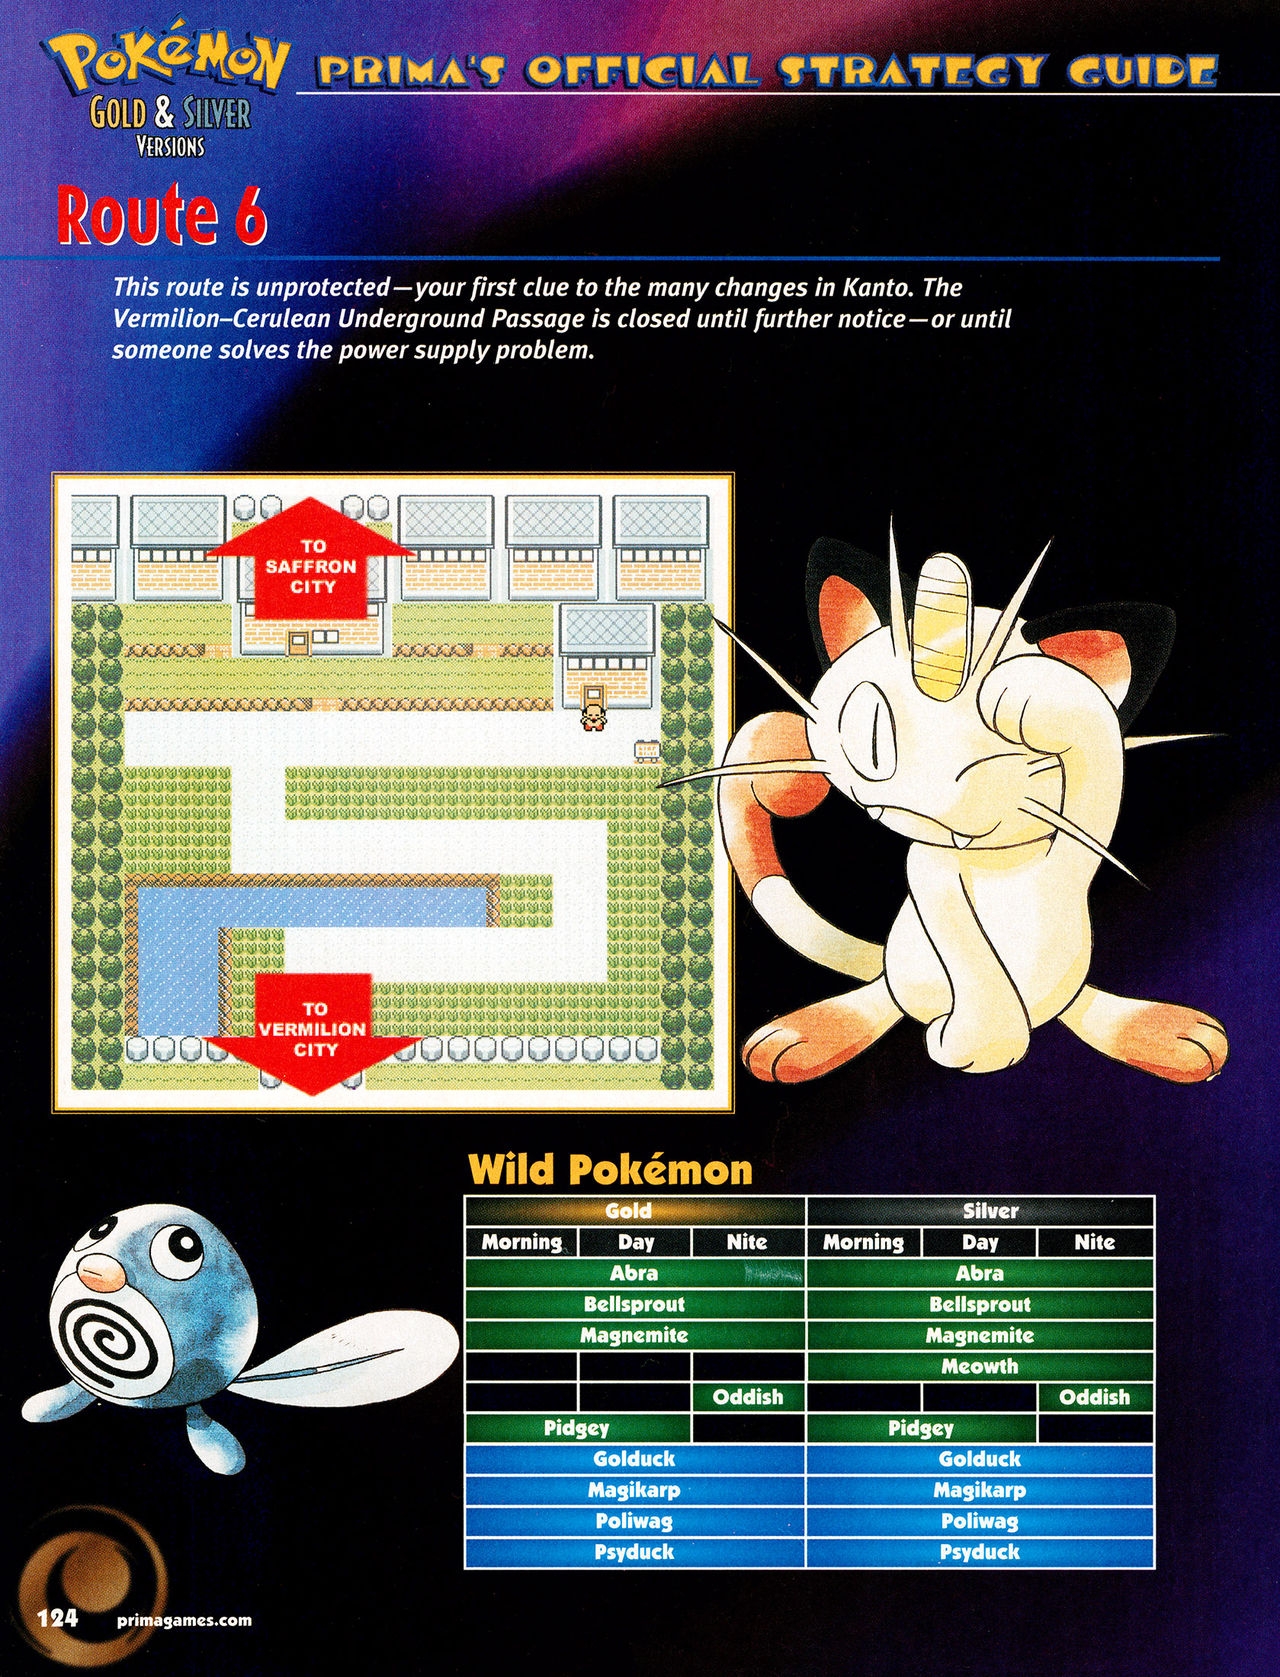 Pokémon Gold & Silver Versions - Strategy Guide 125